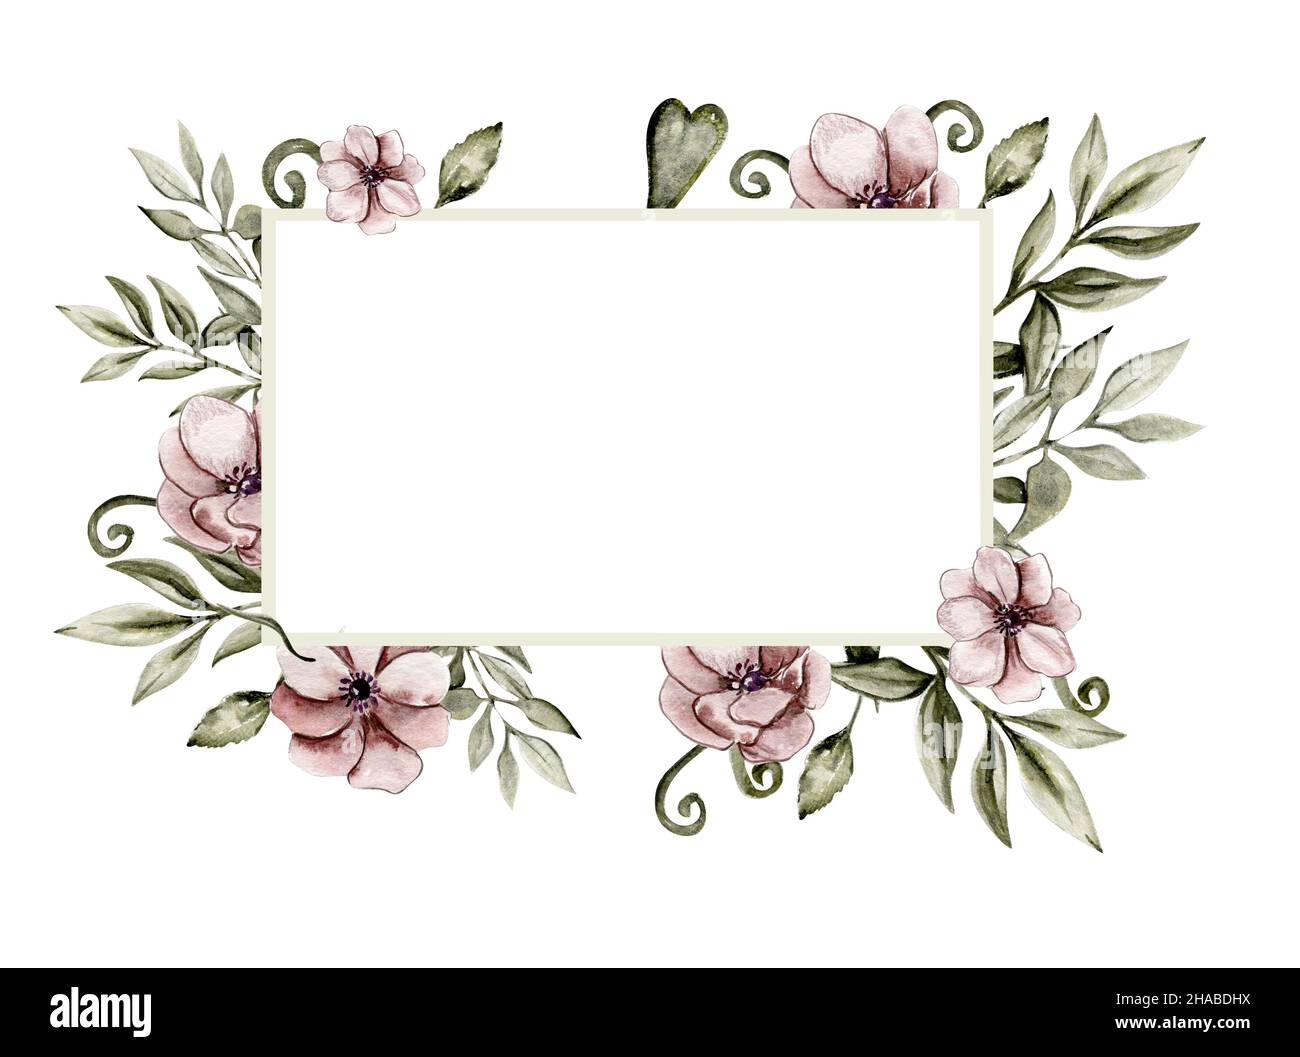 Aquarell romantische Vintage Blumen Rahmen Komposition Stockfotografie -  Alamy